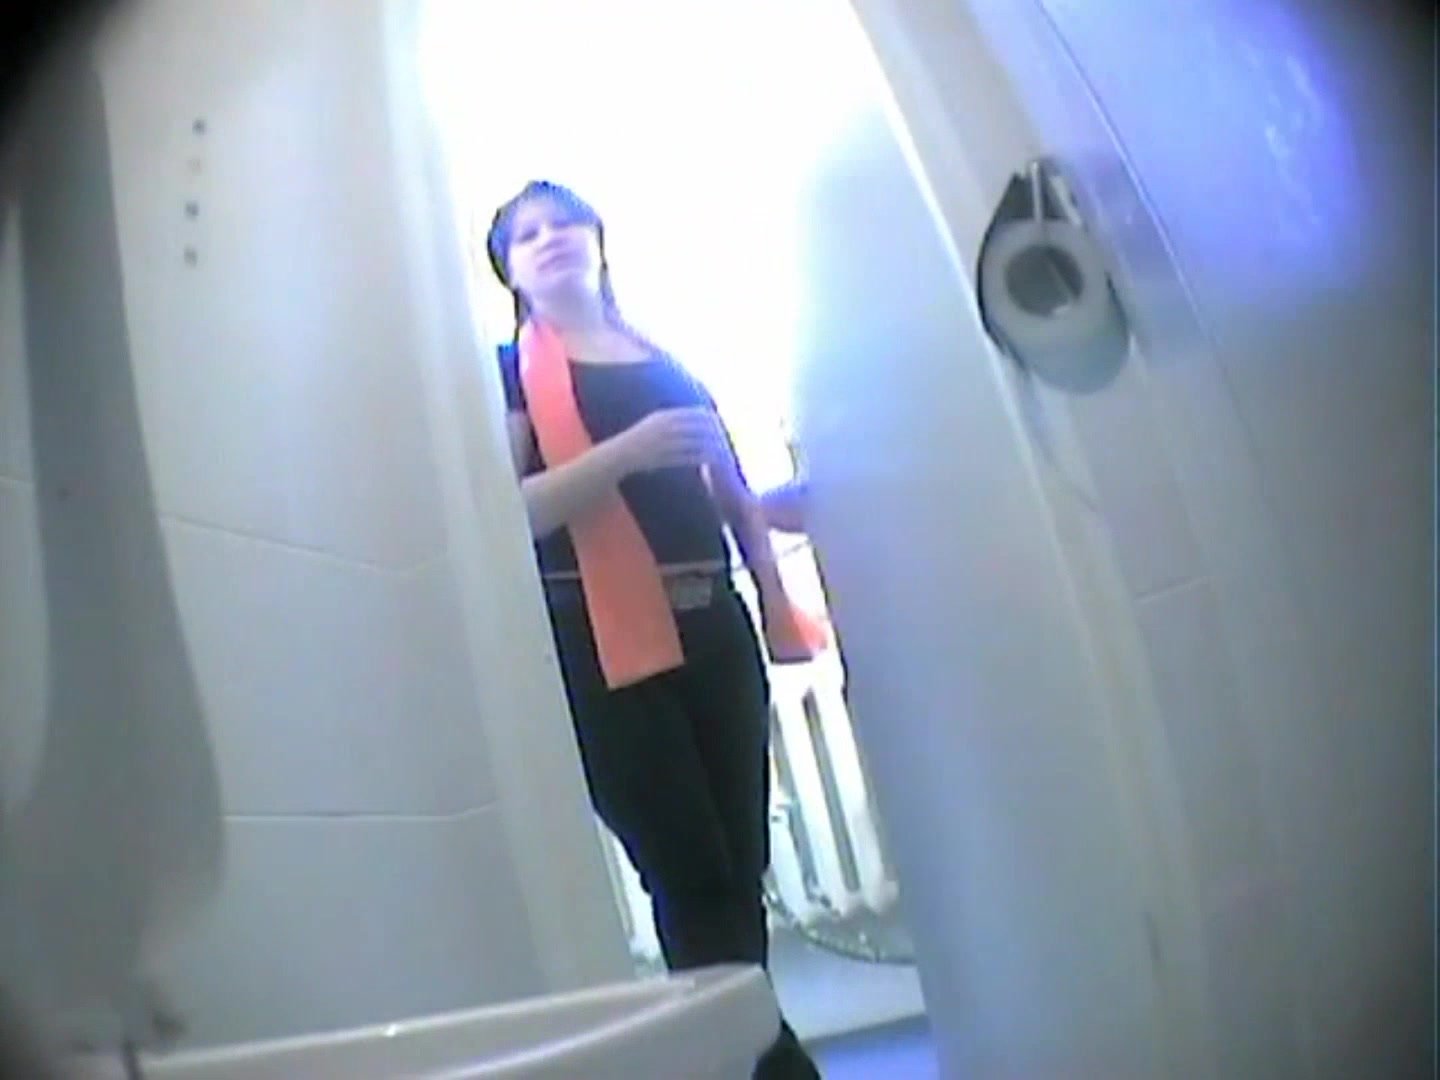 Russian WC pee voyeur - a number of women